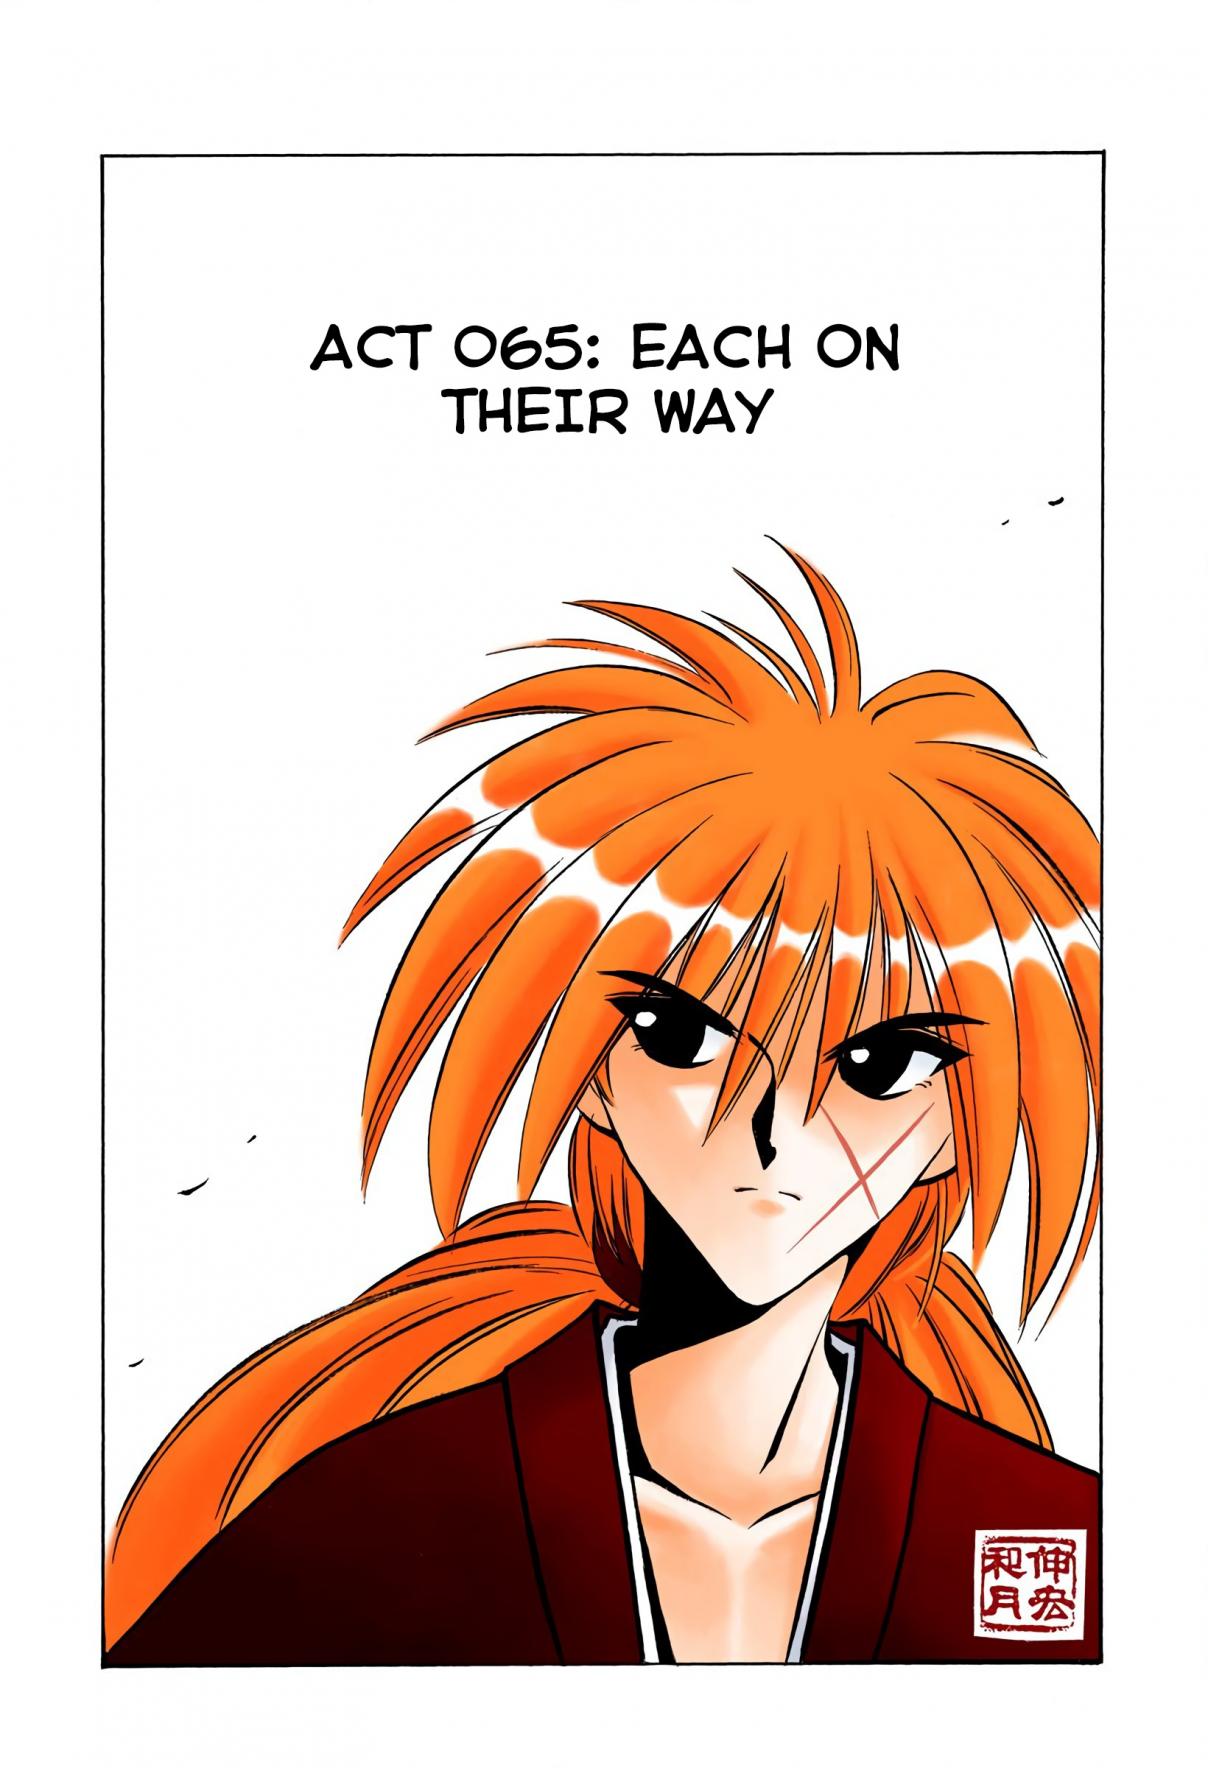 Rurouni Kenshin Digital Colored Comics Vol. 8 Ch. 65 Each on Their Own Way